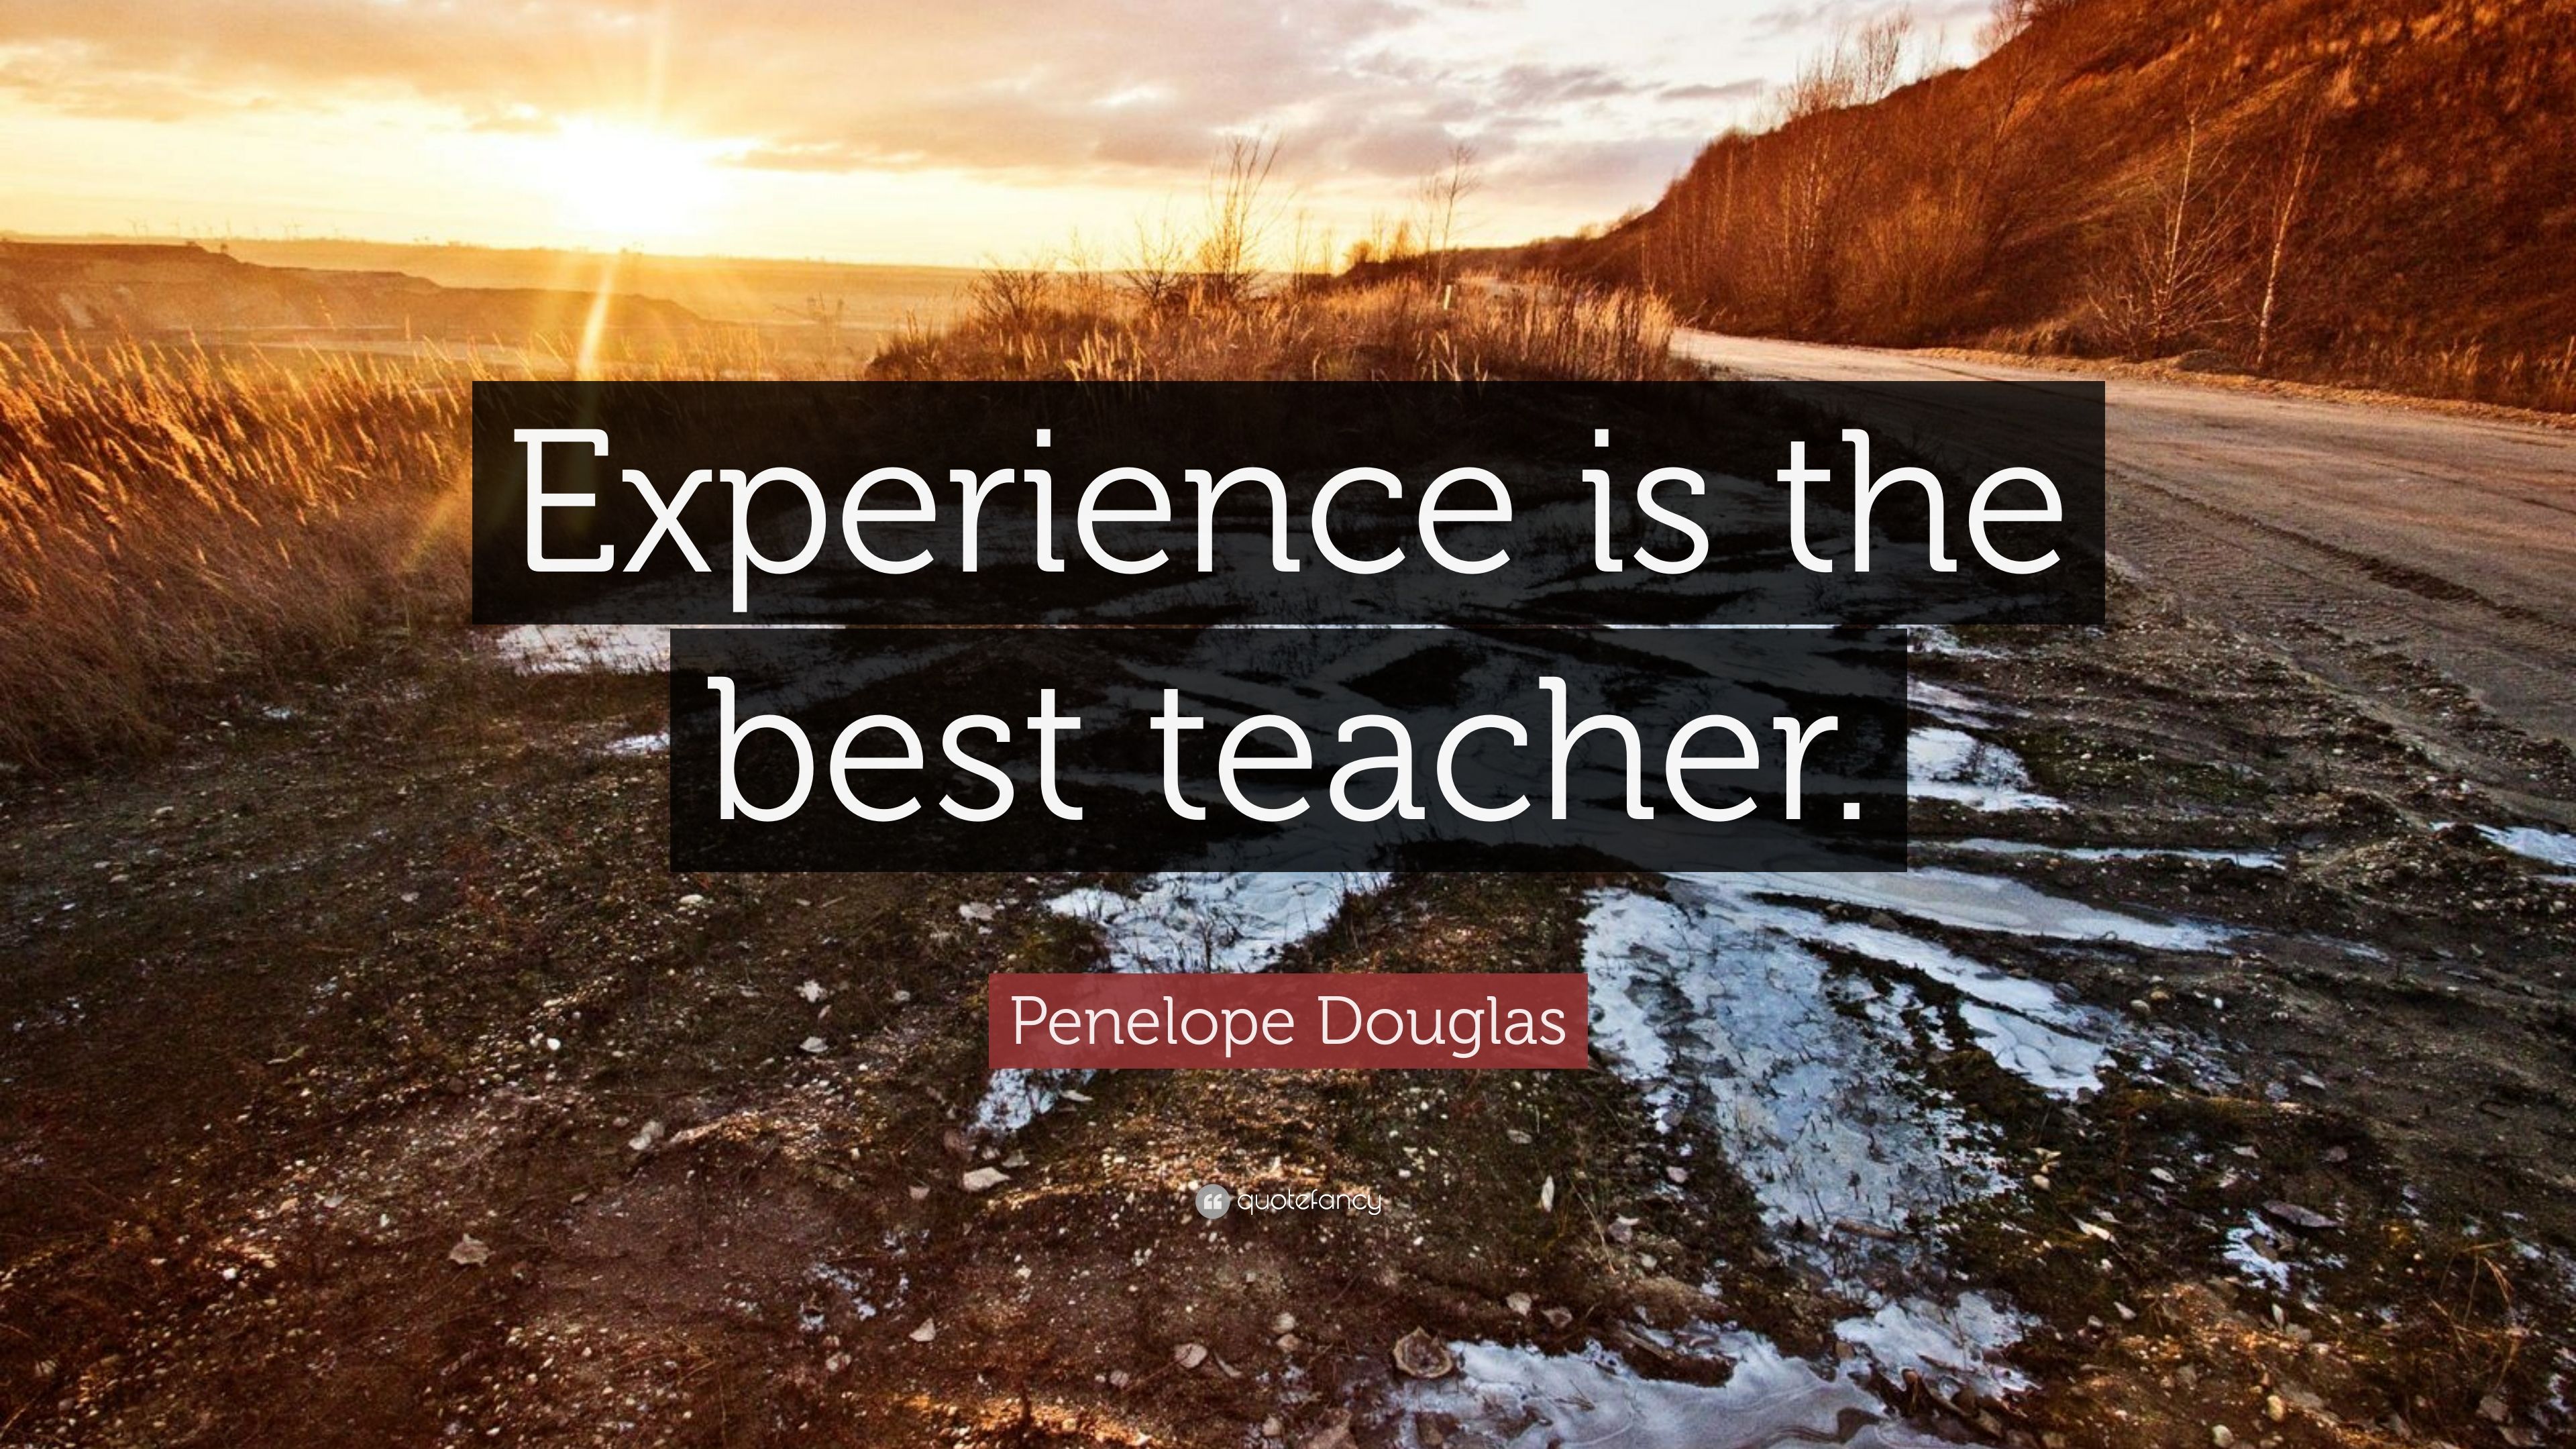 Penelope Douglas Quote: “Experience is the best teacher.” (12 wallpaper)